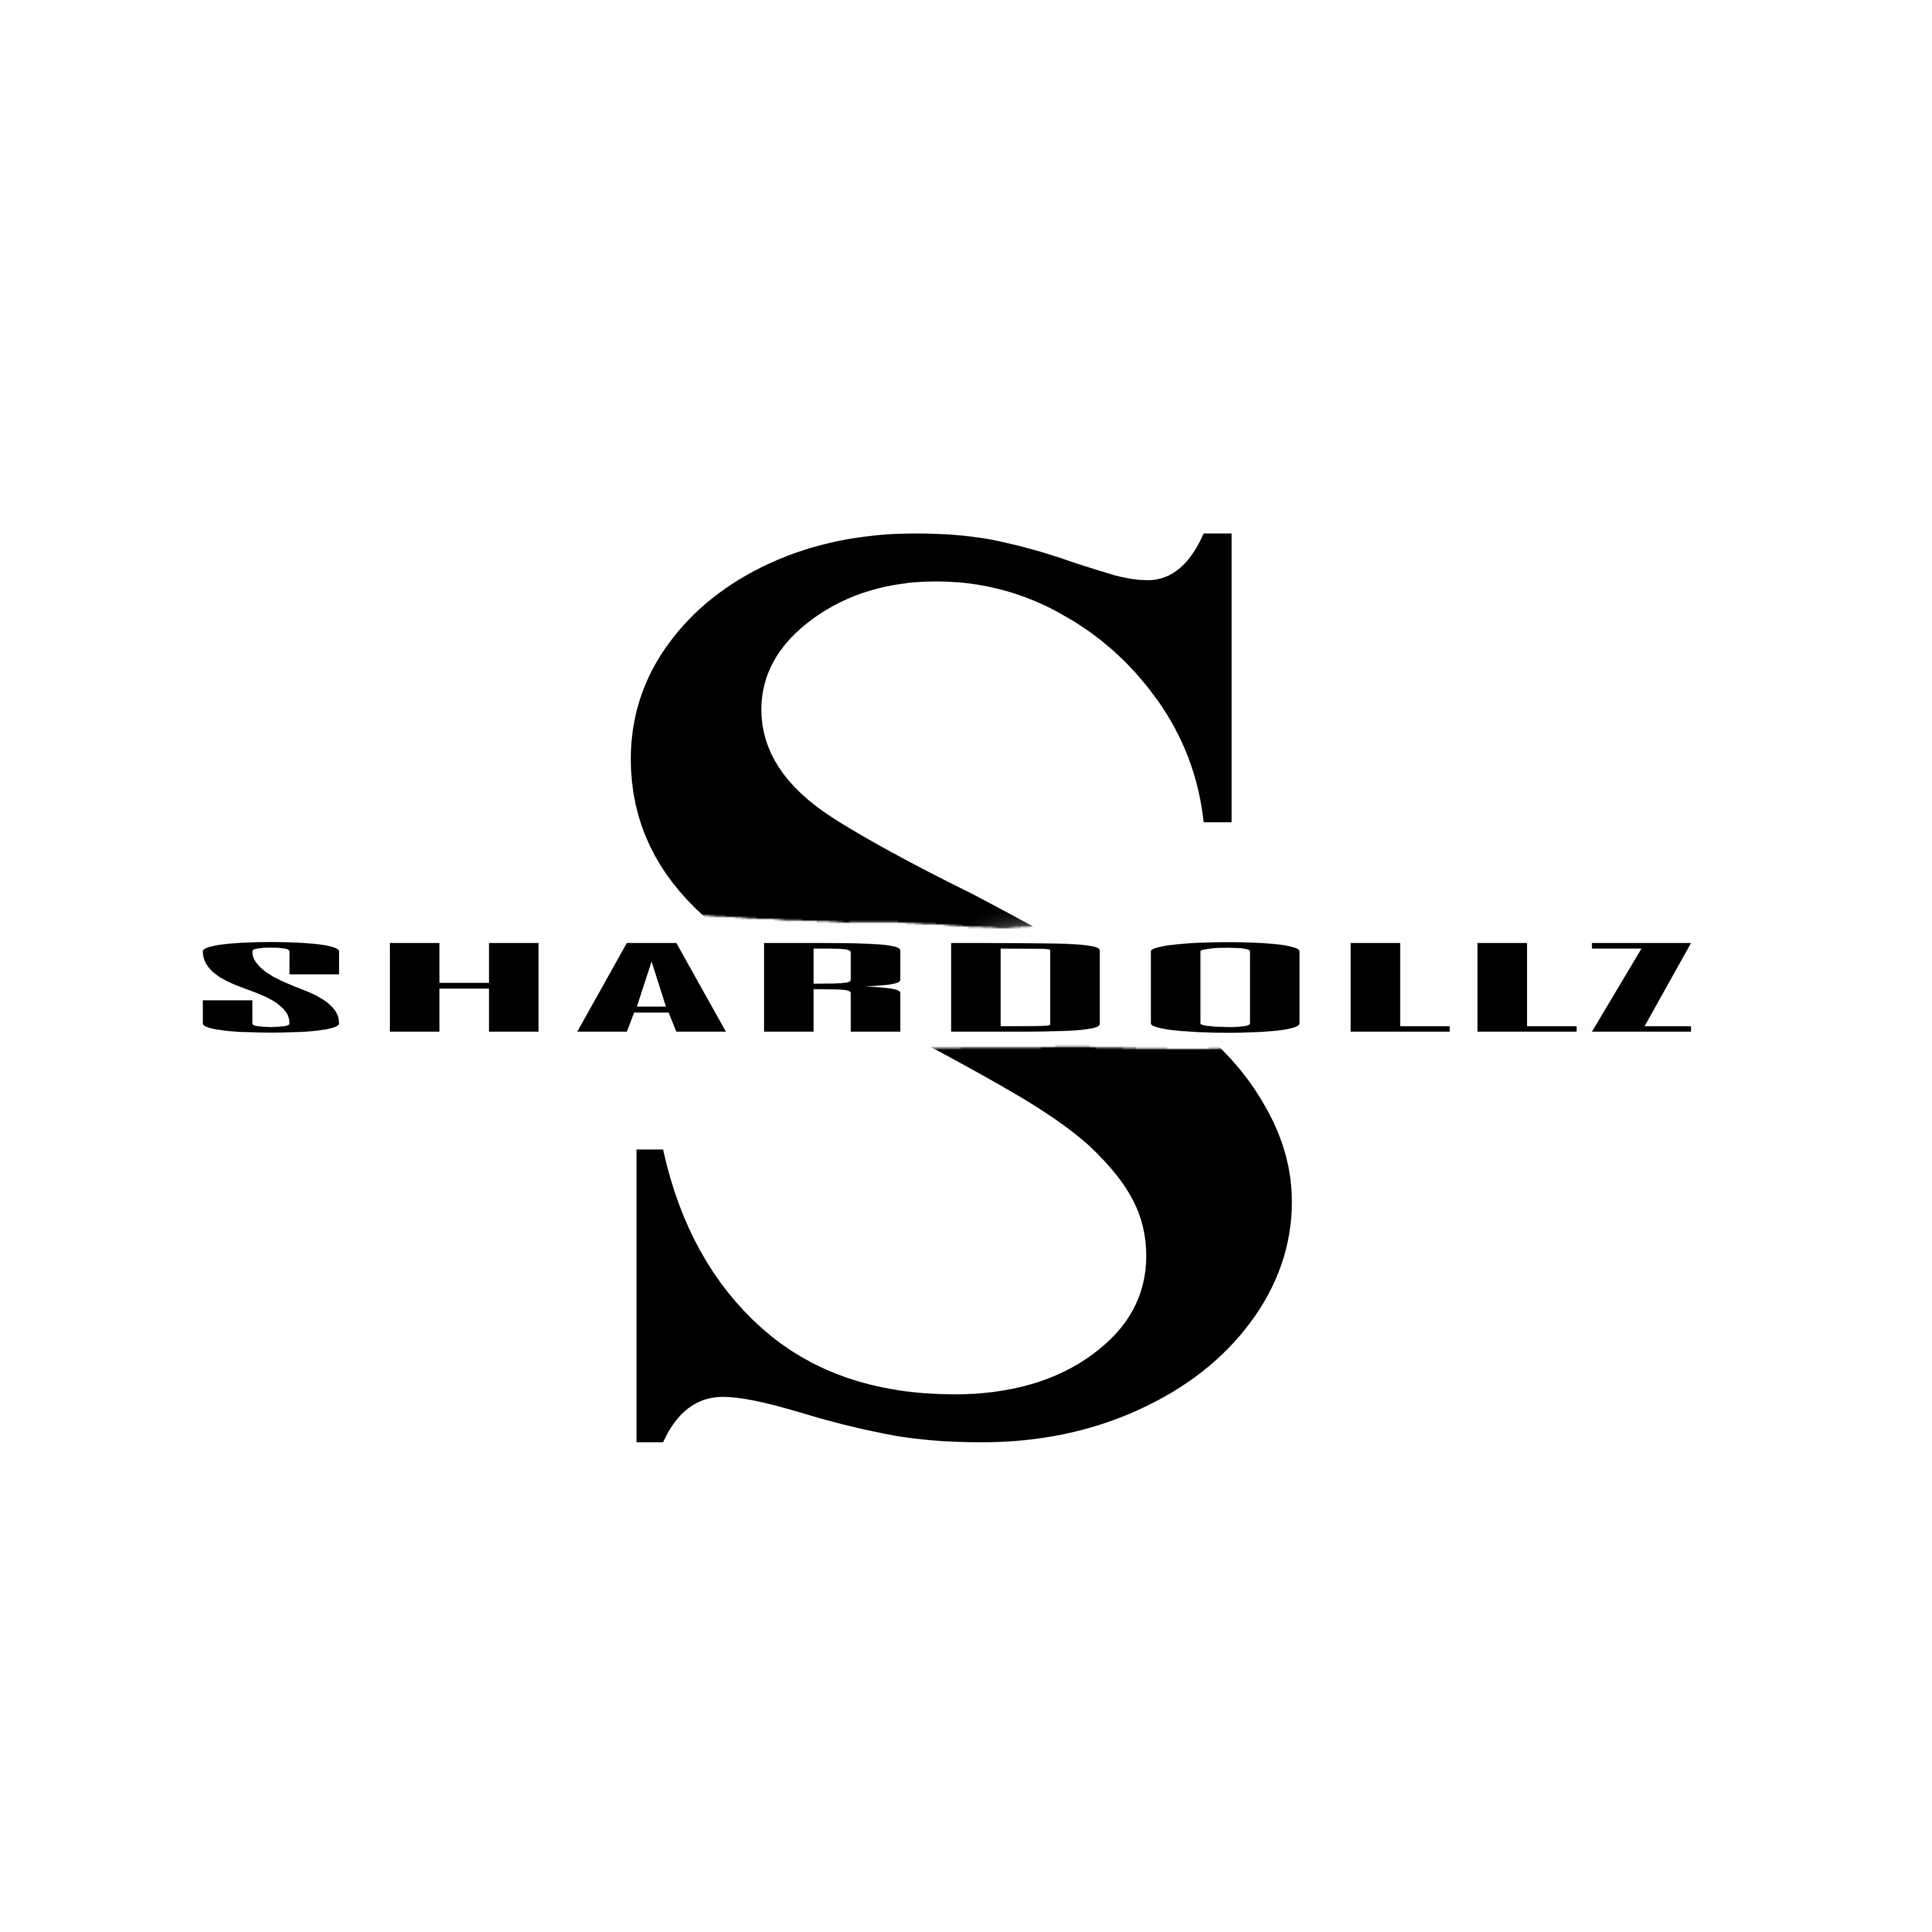 Shardollz